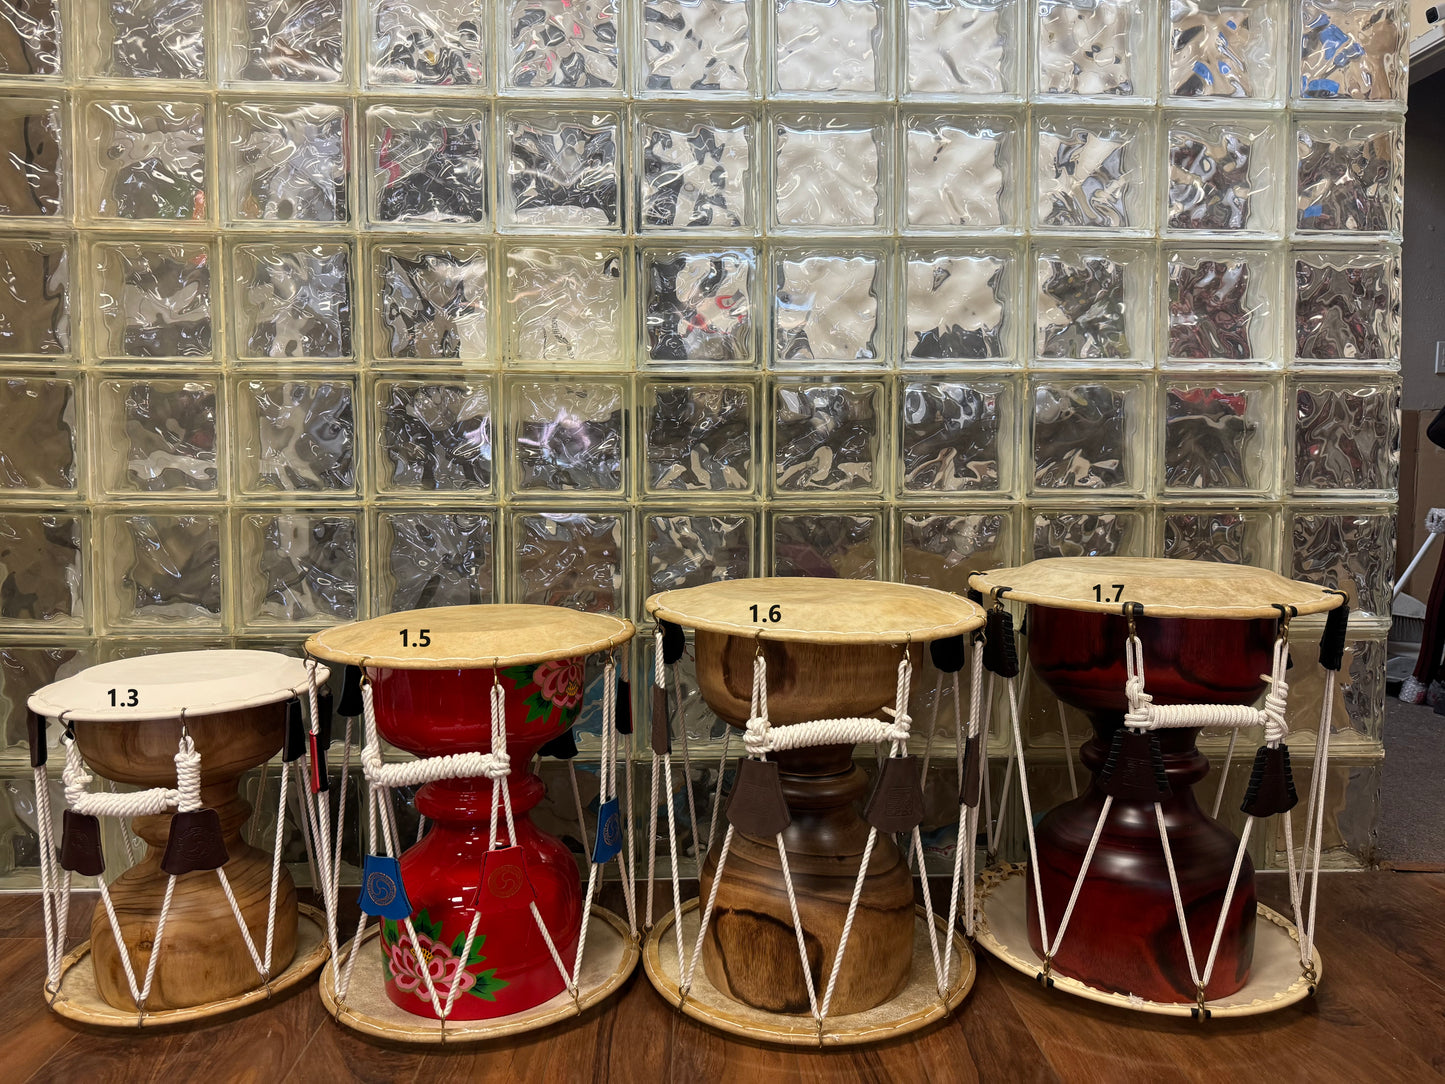 Janggu - Korean Hourglass Drum Size 1.3 - for Kids